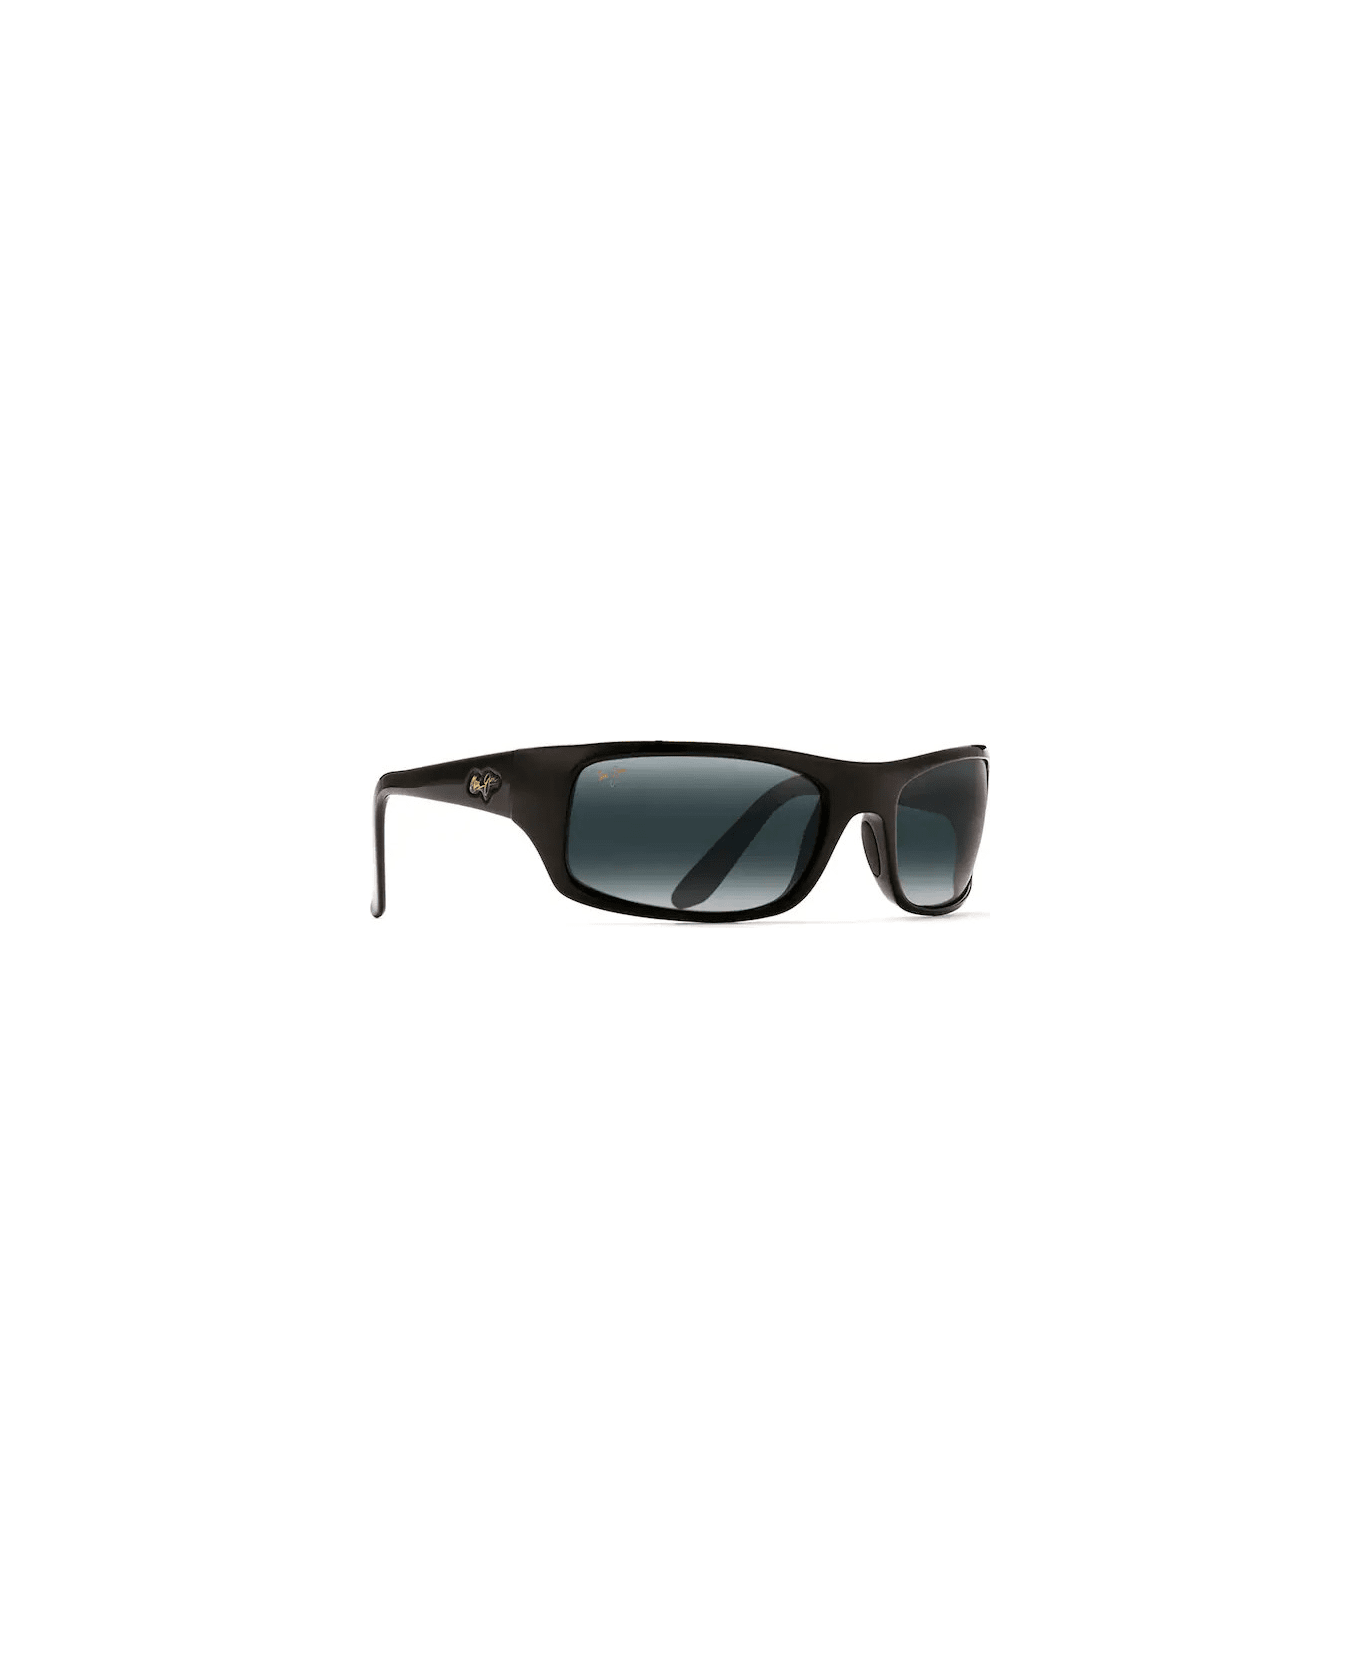 Maui Jim MJ202-02 Sunglasses サングラス